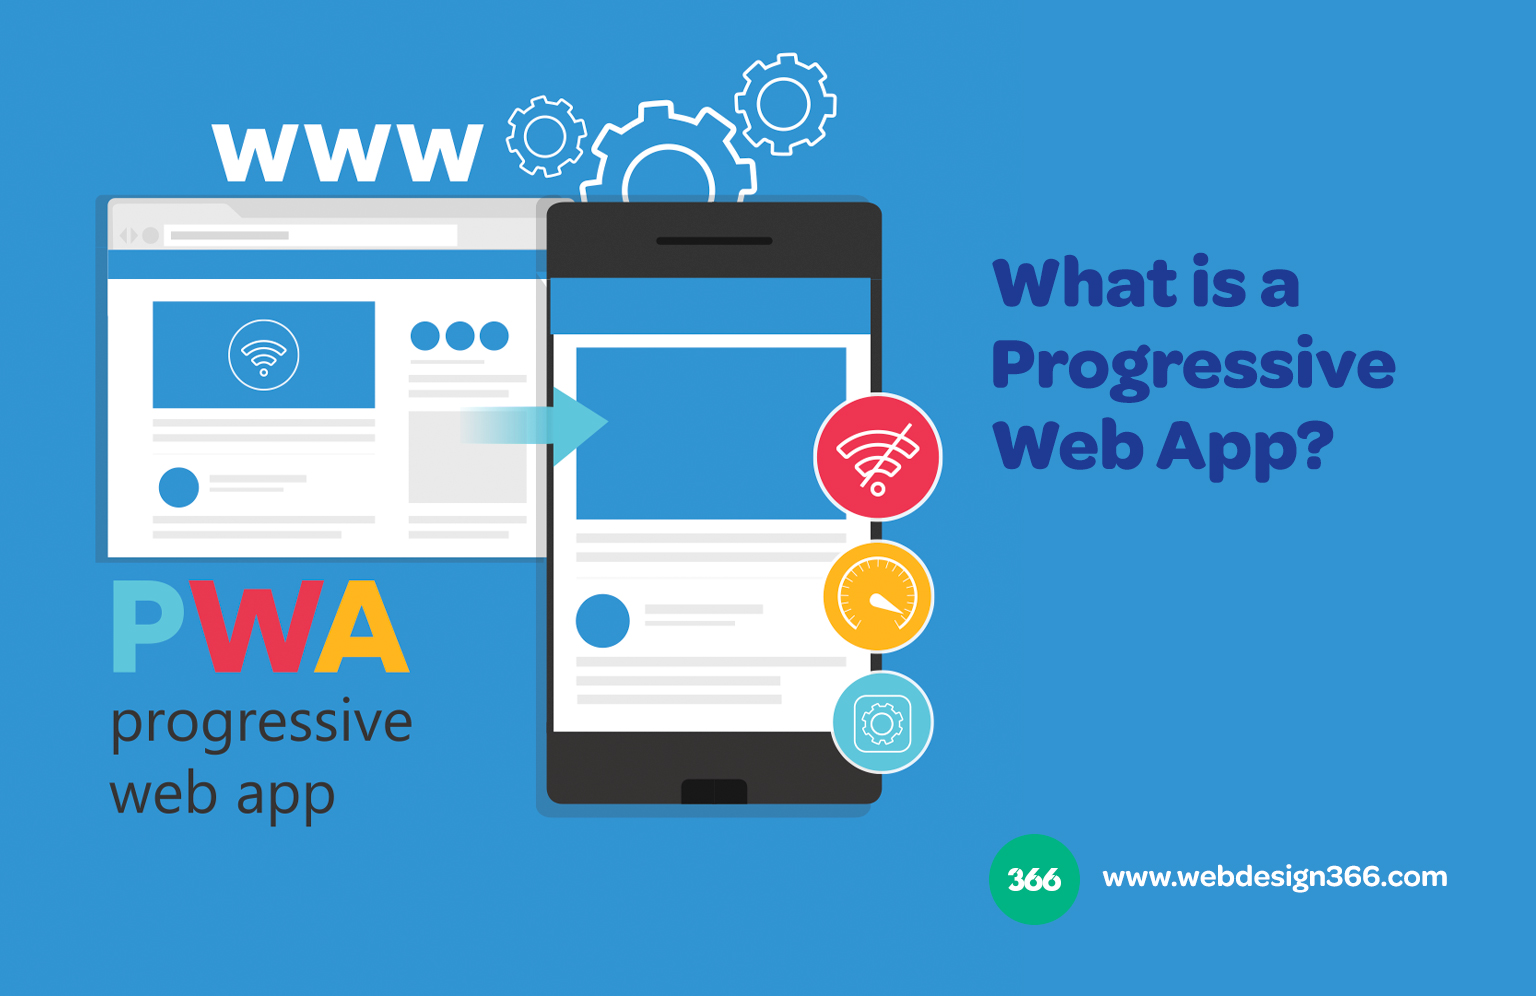 What is Progressive Web App?